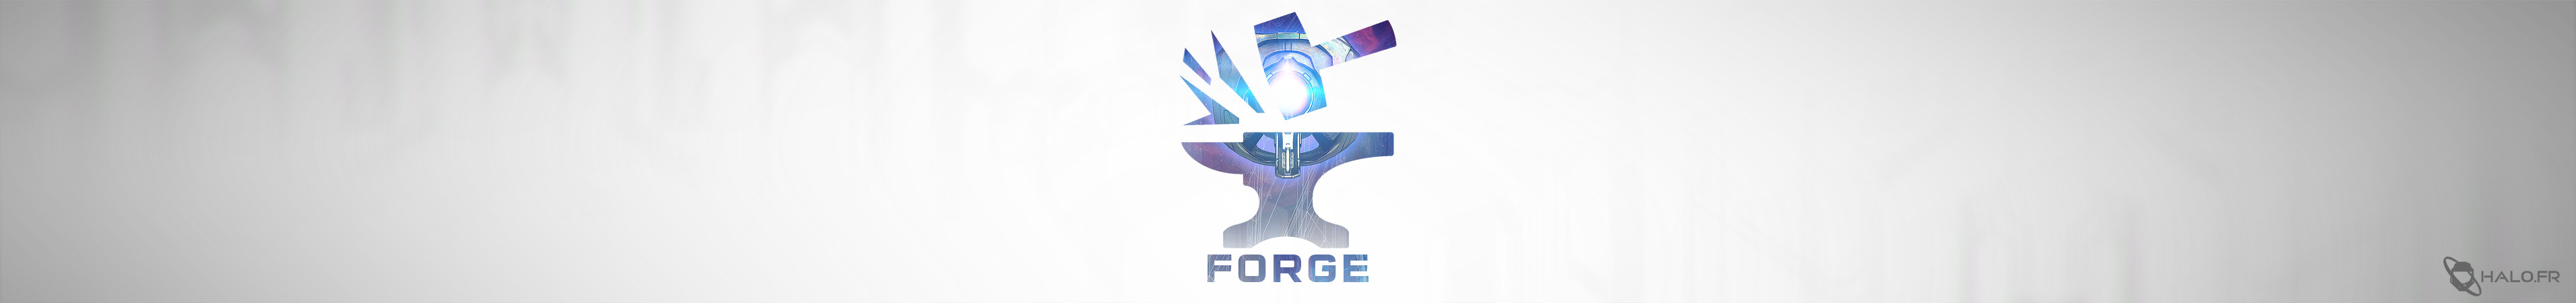 [H5] Forge | Halo.fr